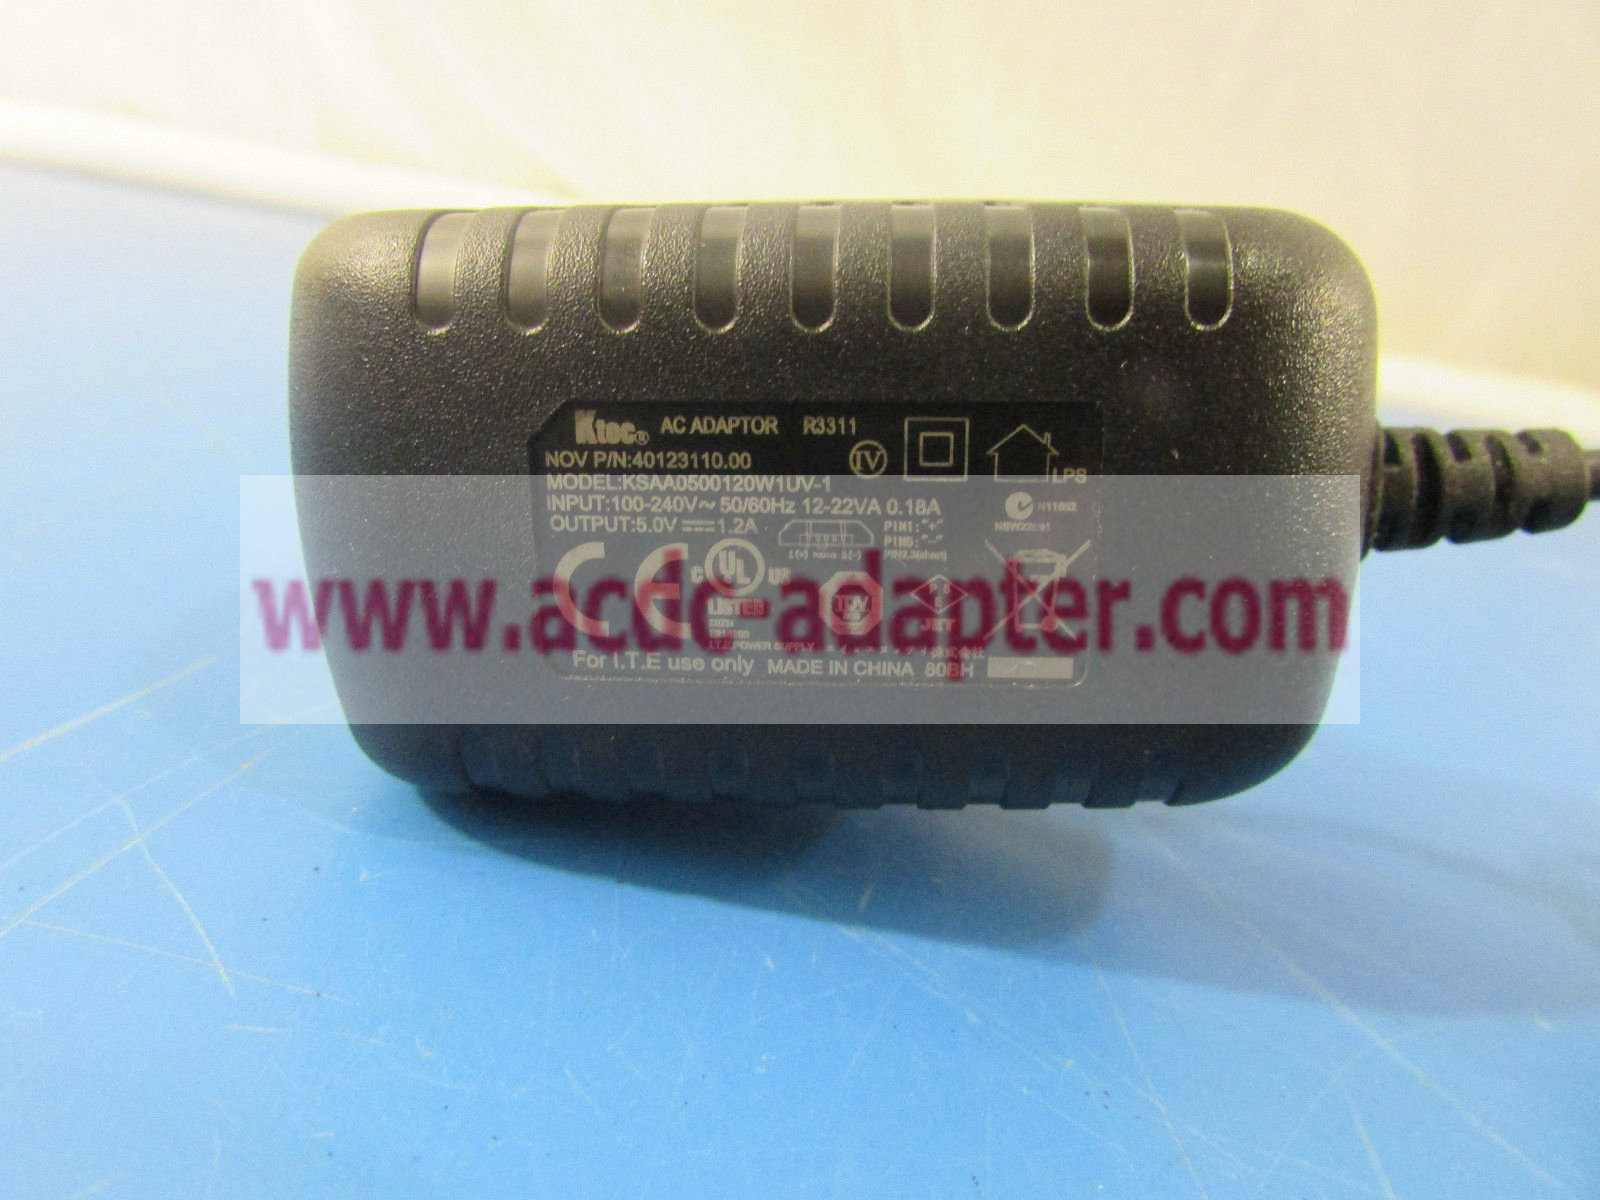 NEW KTec KSAA0500120W1UV-1 40123110.00 5.0V 1.2A AC DC USB Power Supply Adapter - Click Image to Close